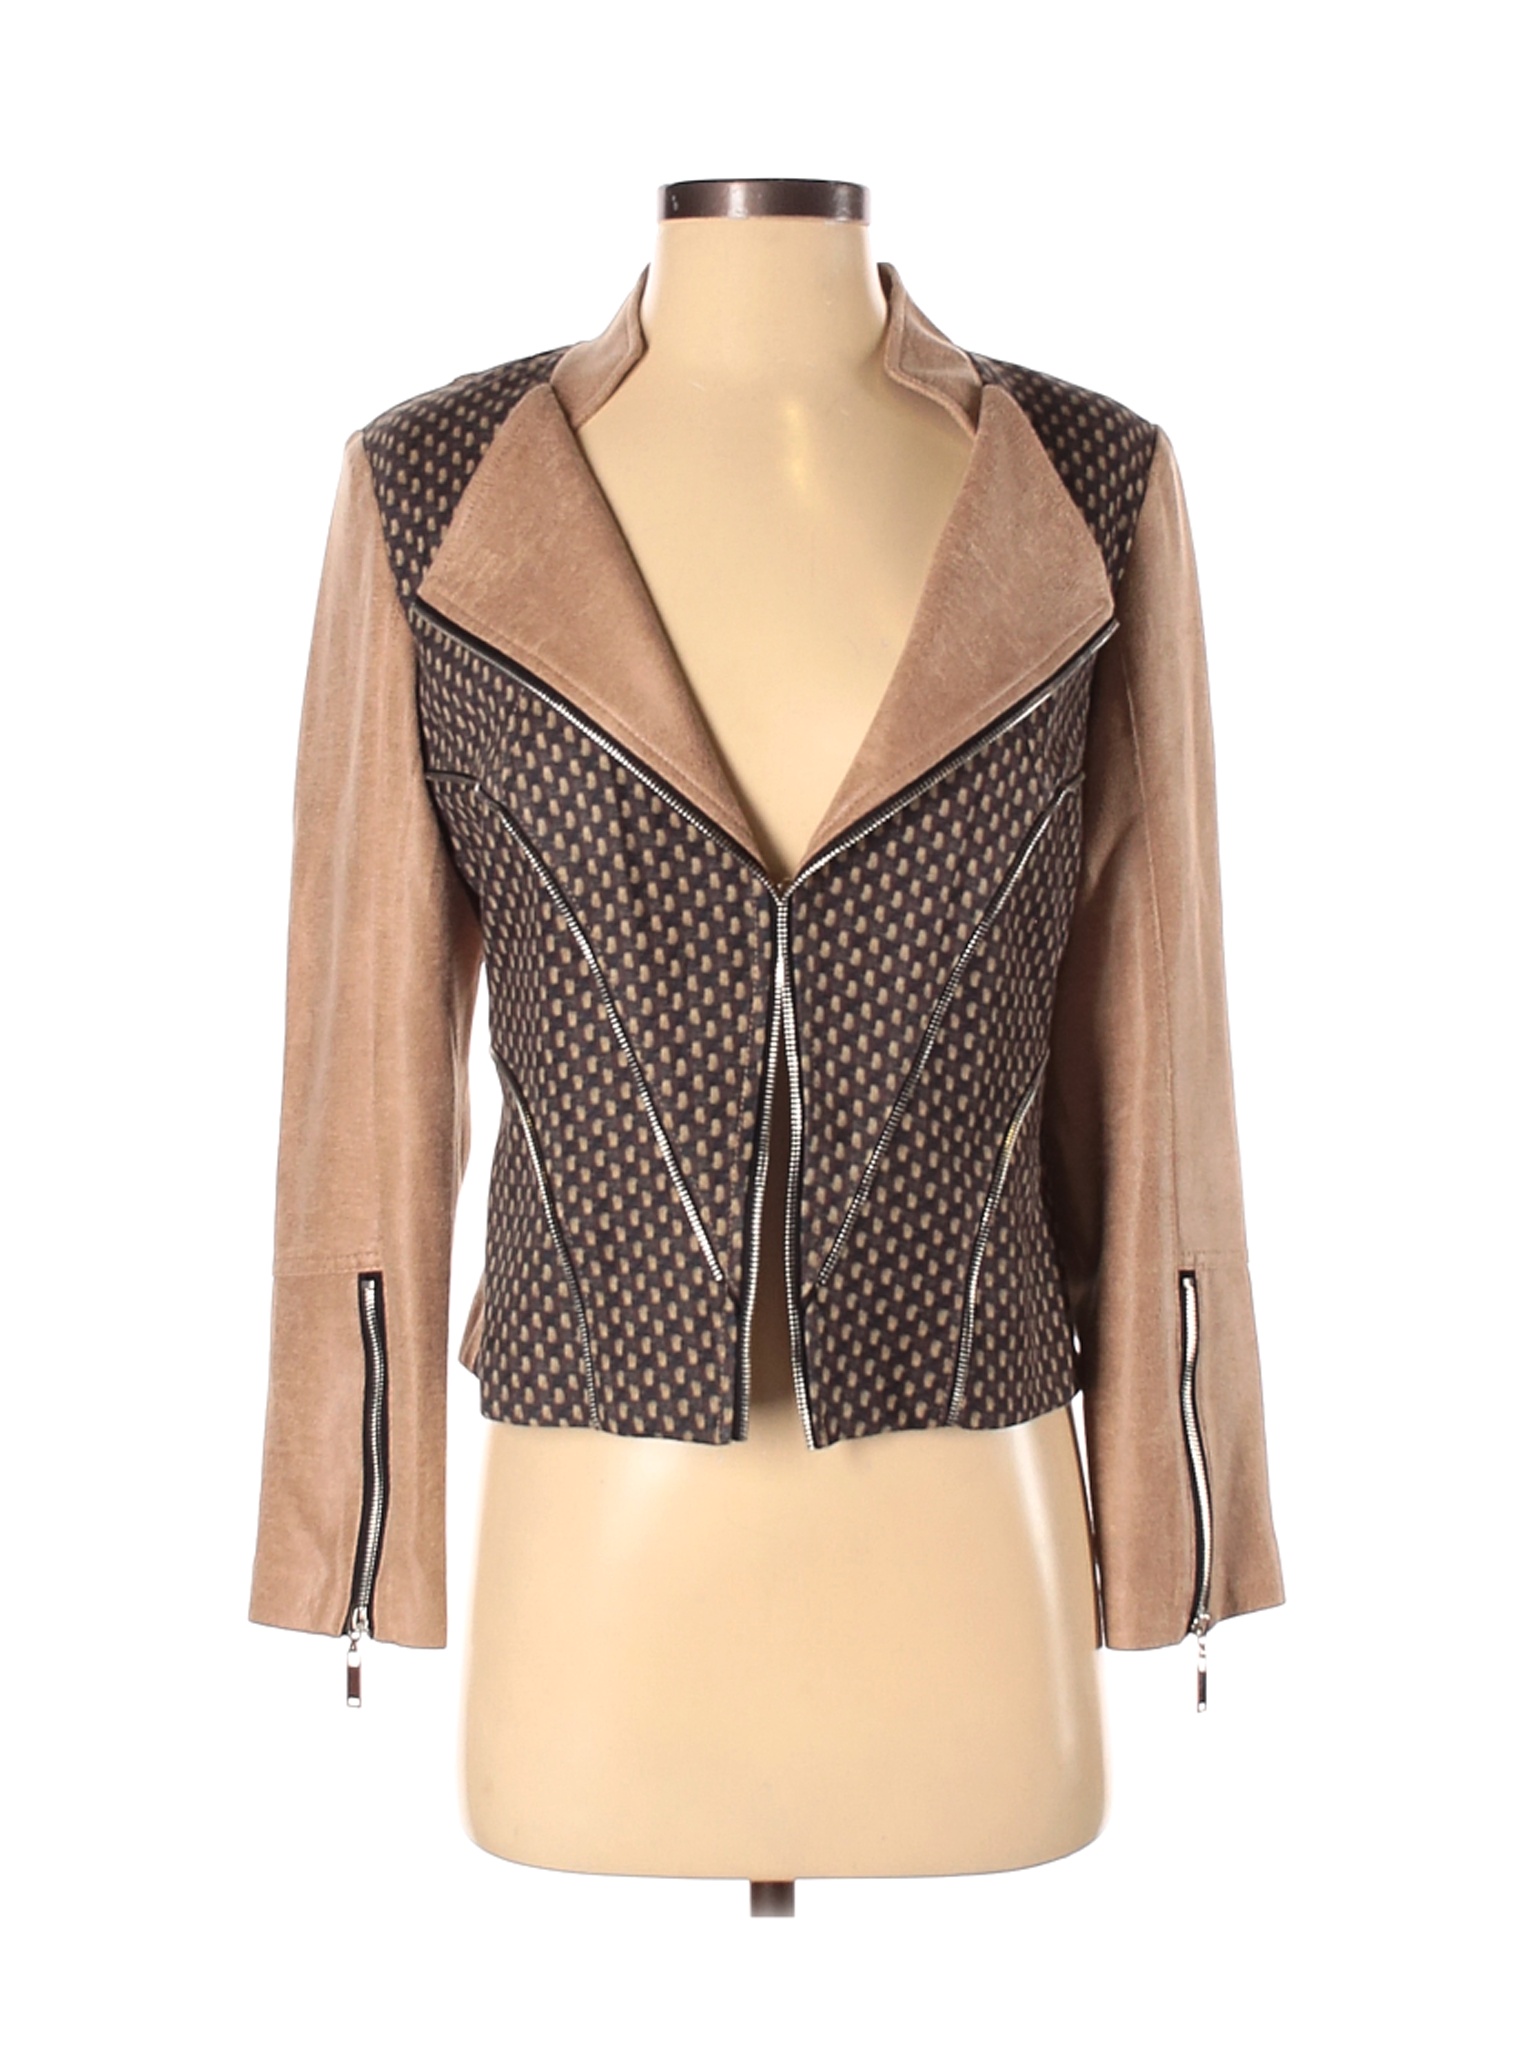 Insight Women Brown Jacket 4 | eBay